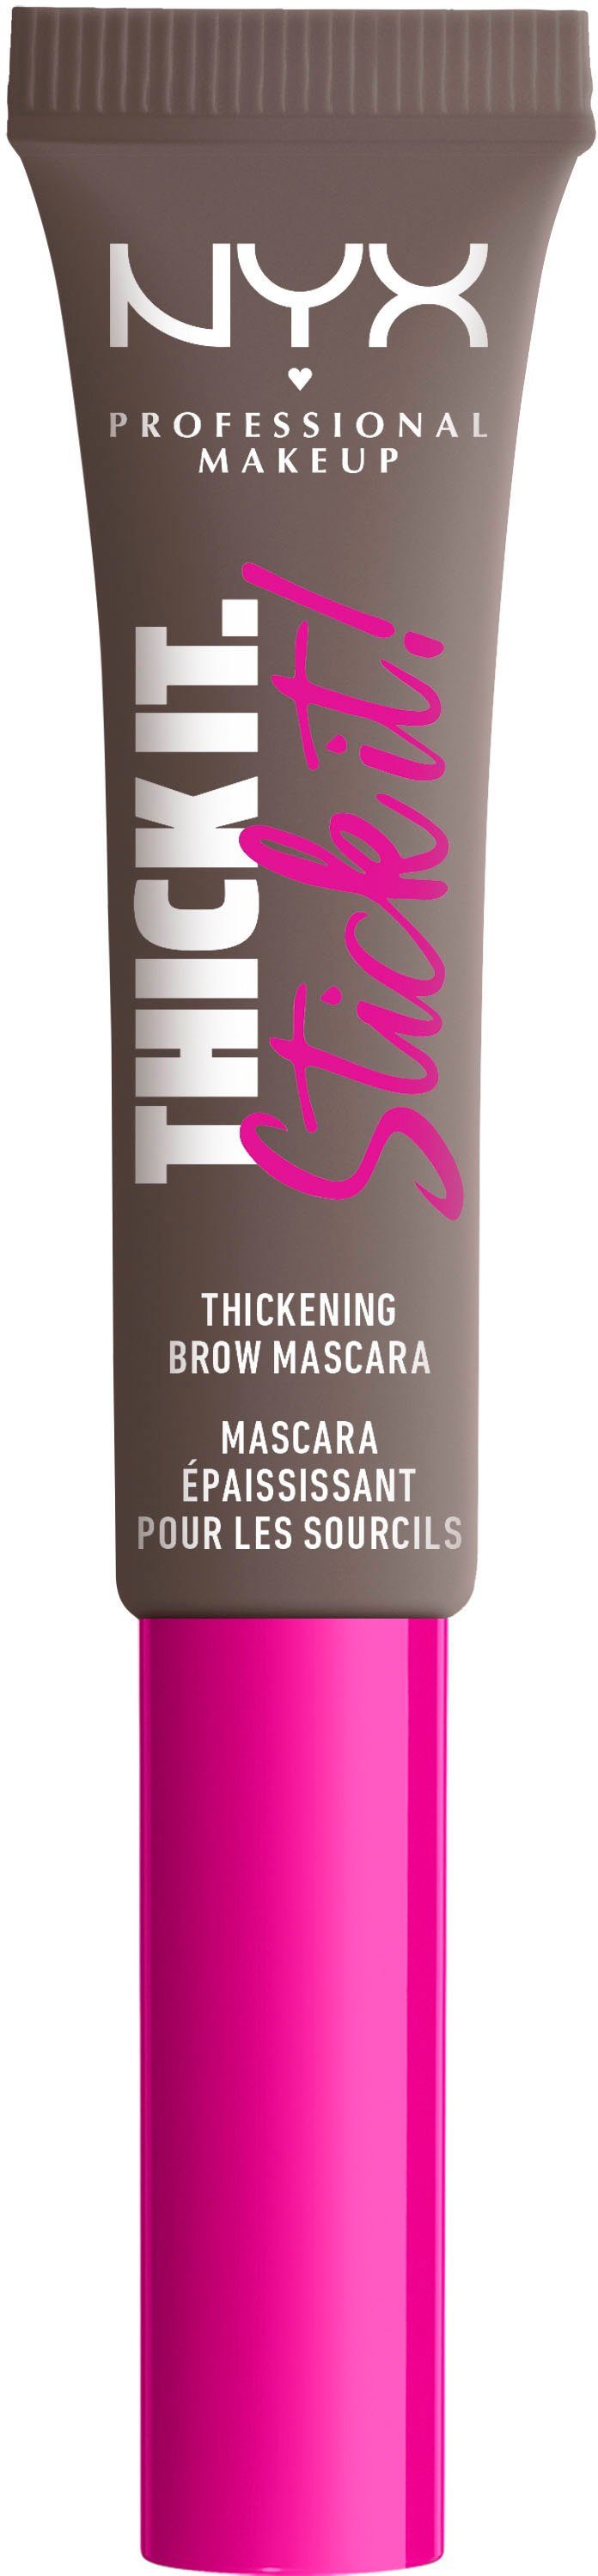 Mascara ash Brow Professional brown NYX Makeup Augenbrauen-Kosmetika